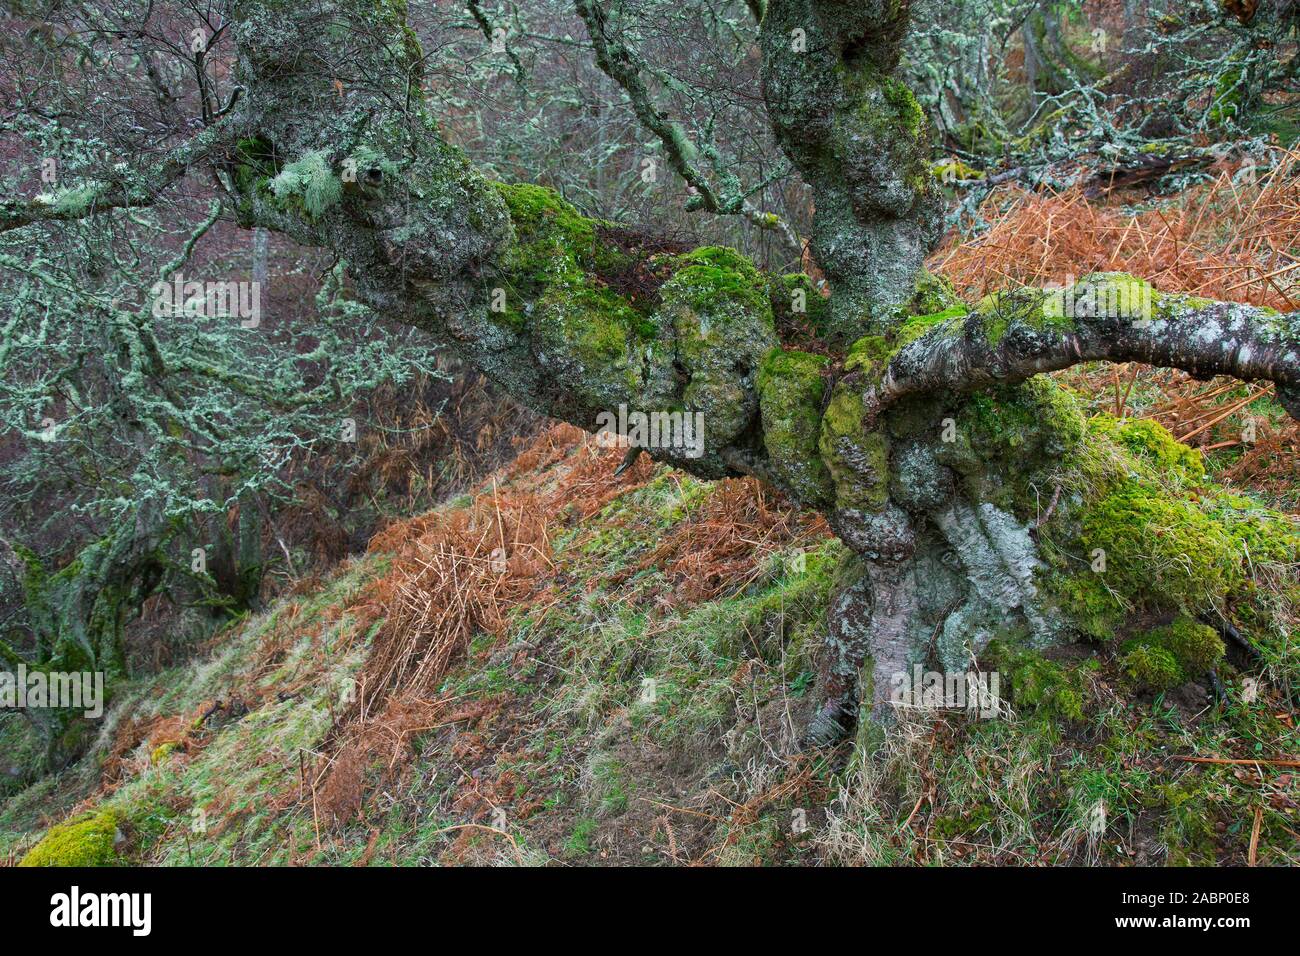 Gnarled silver birch / warty birch / European white birch (Betula pendula / Betula verucosa) tree covered in mosses and Usnea lichens in winter Stock Photo